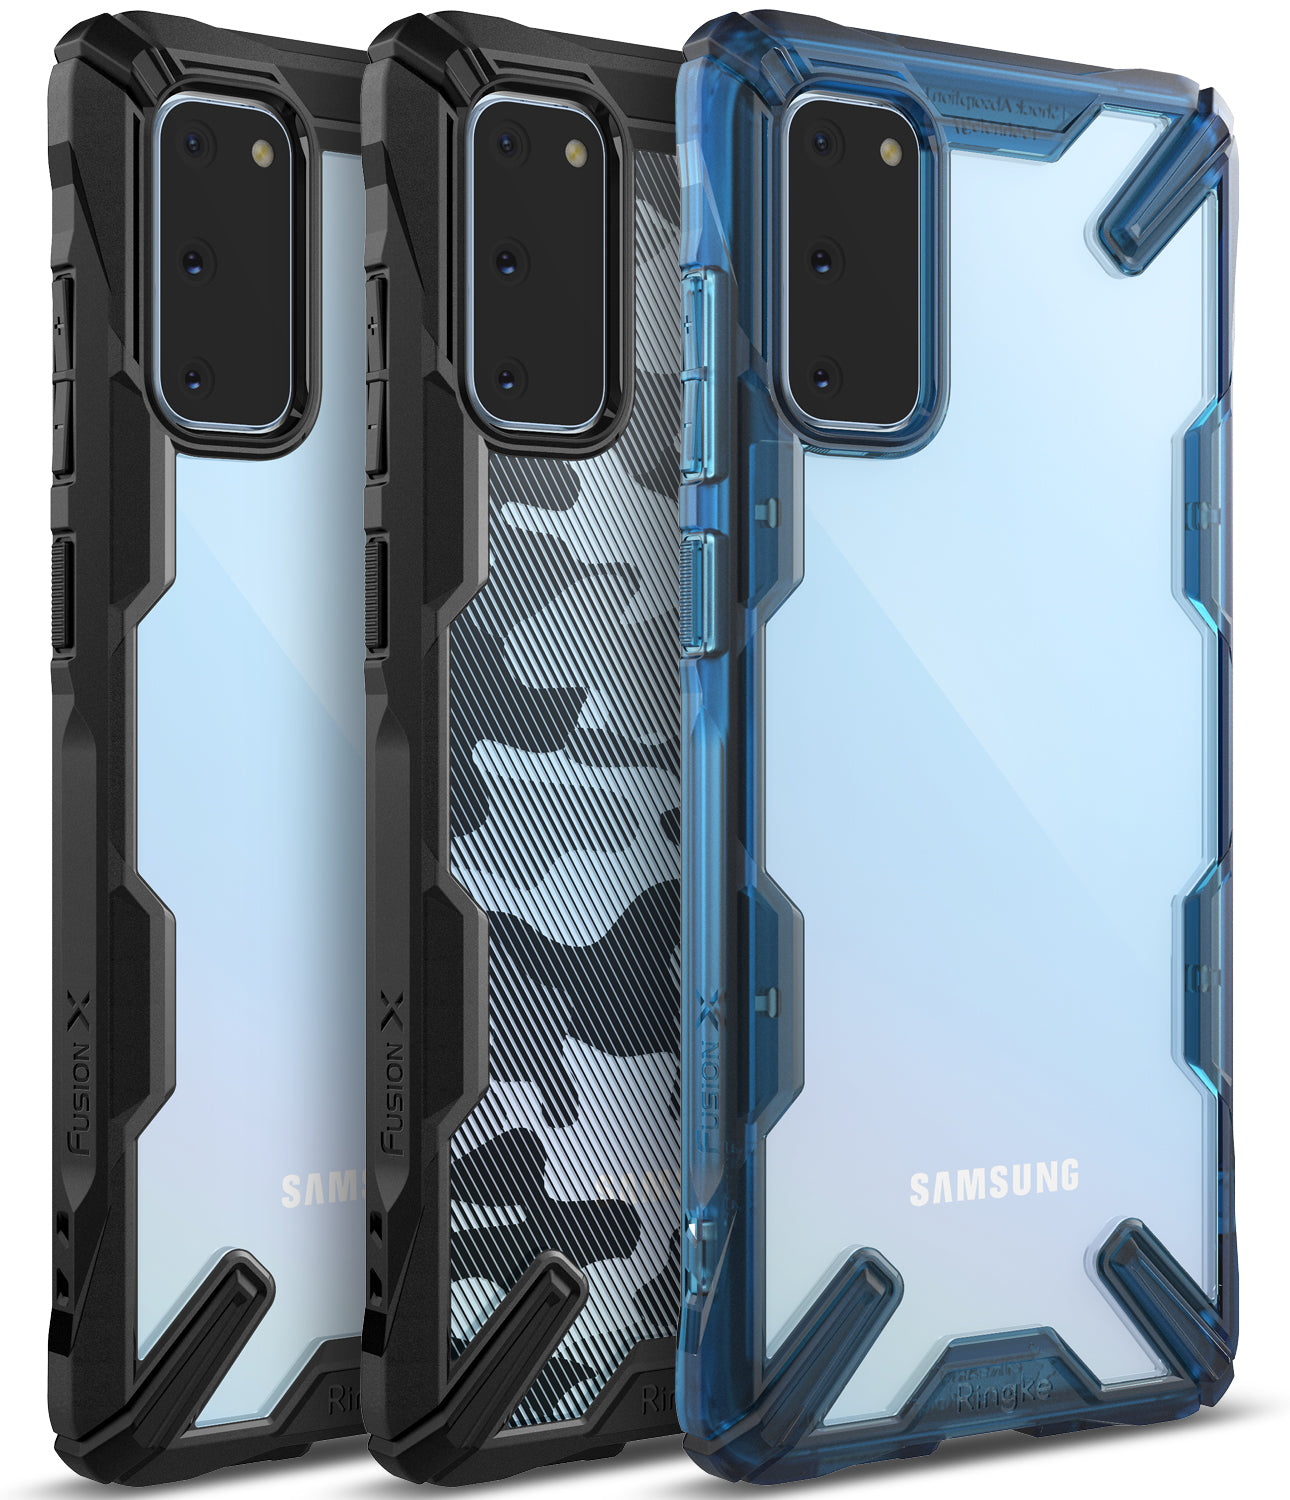 Ringke Galaxy S20 Fusion-X Case Black, Camo Black, Space Blue Colors